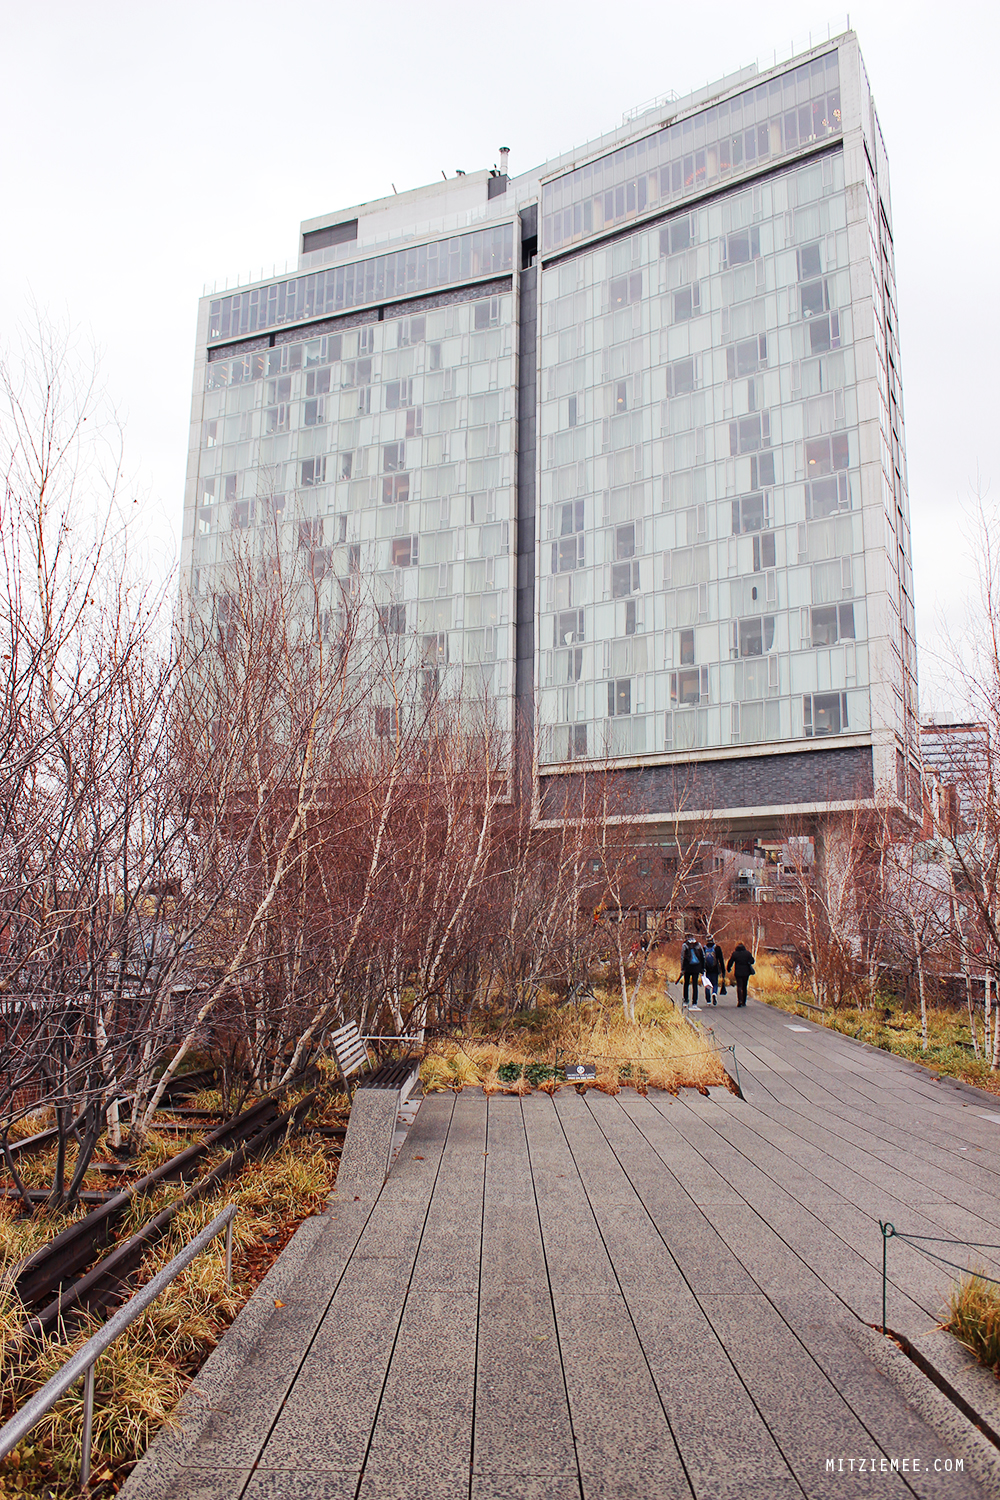 The High Line, New York